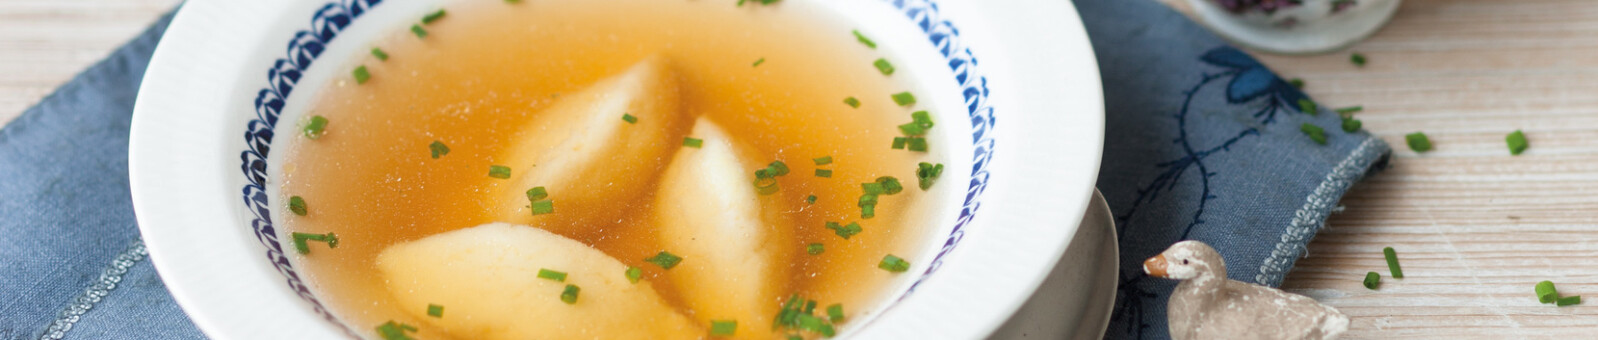     Soup with semolina dumplings 